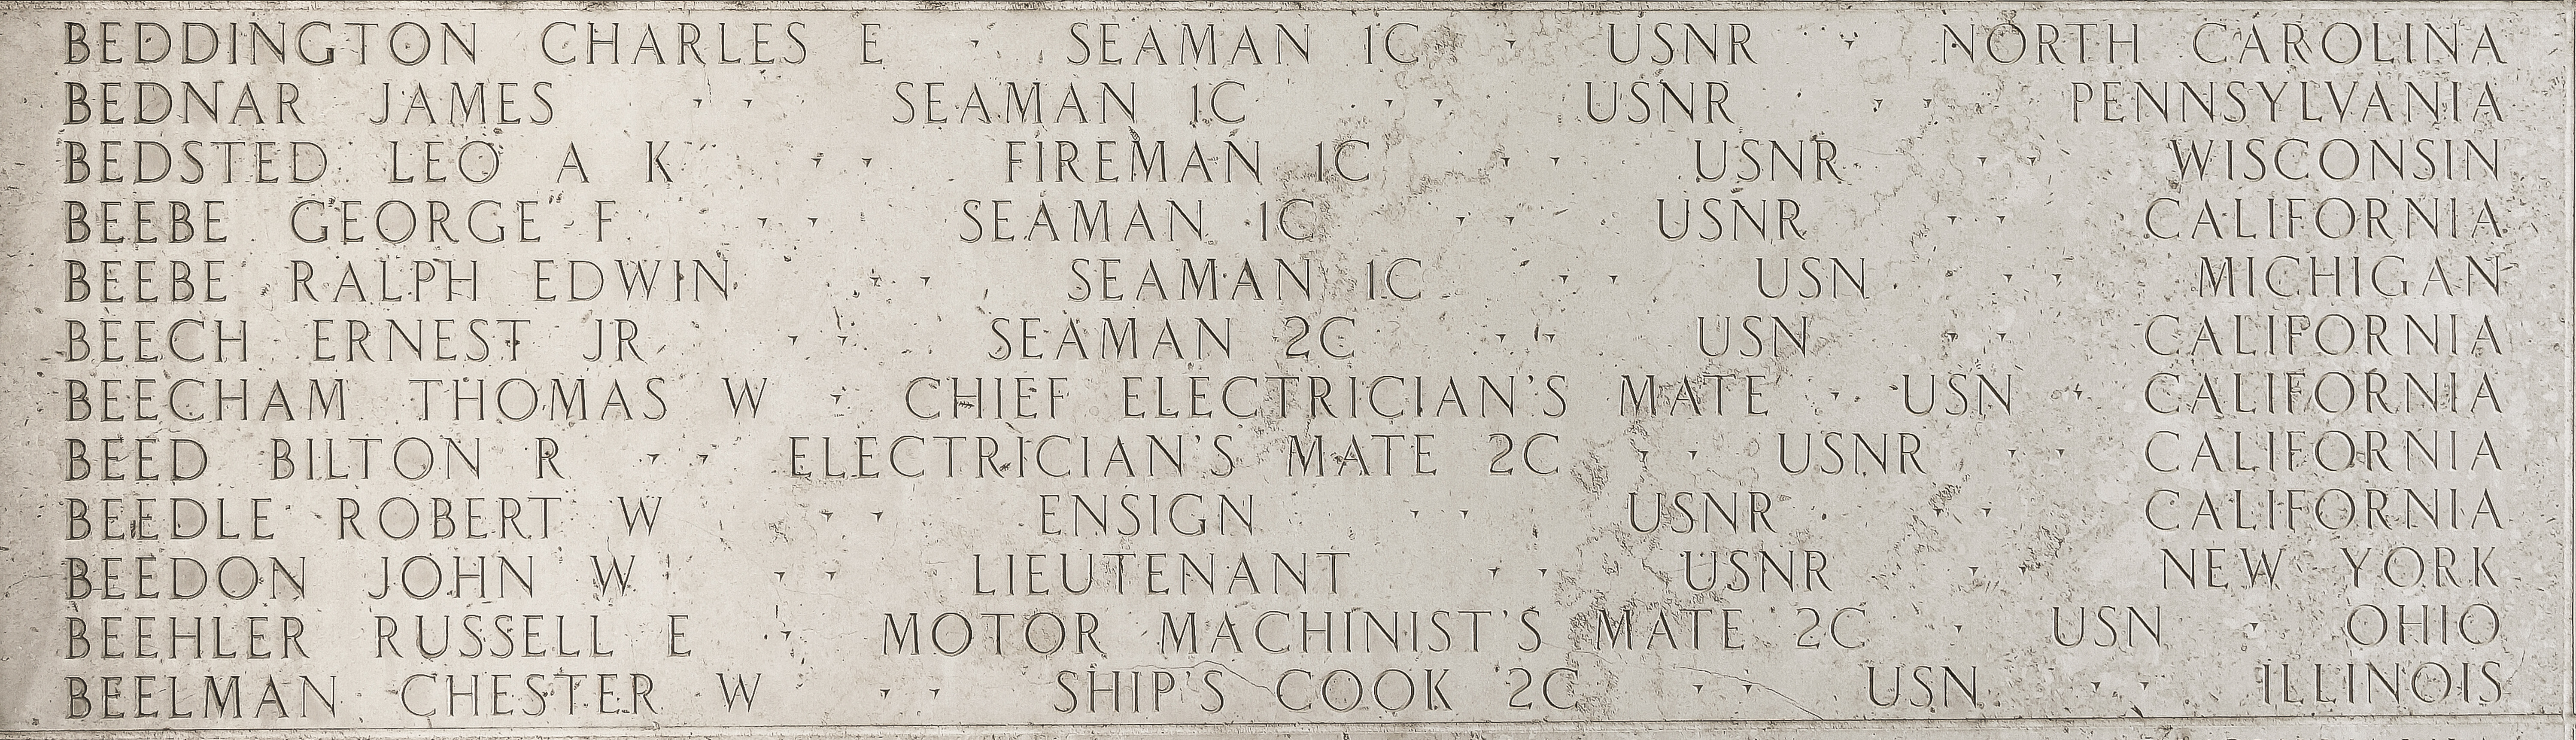 Thomas W. Beecham, Chief Electrician's Mate